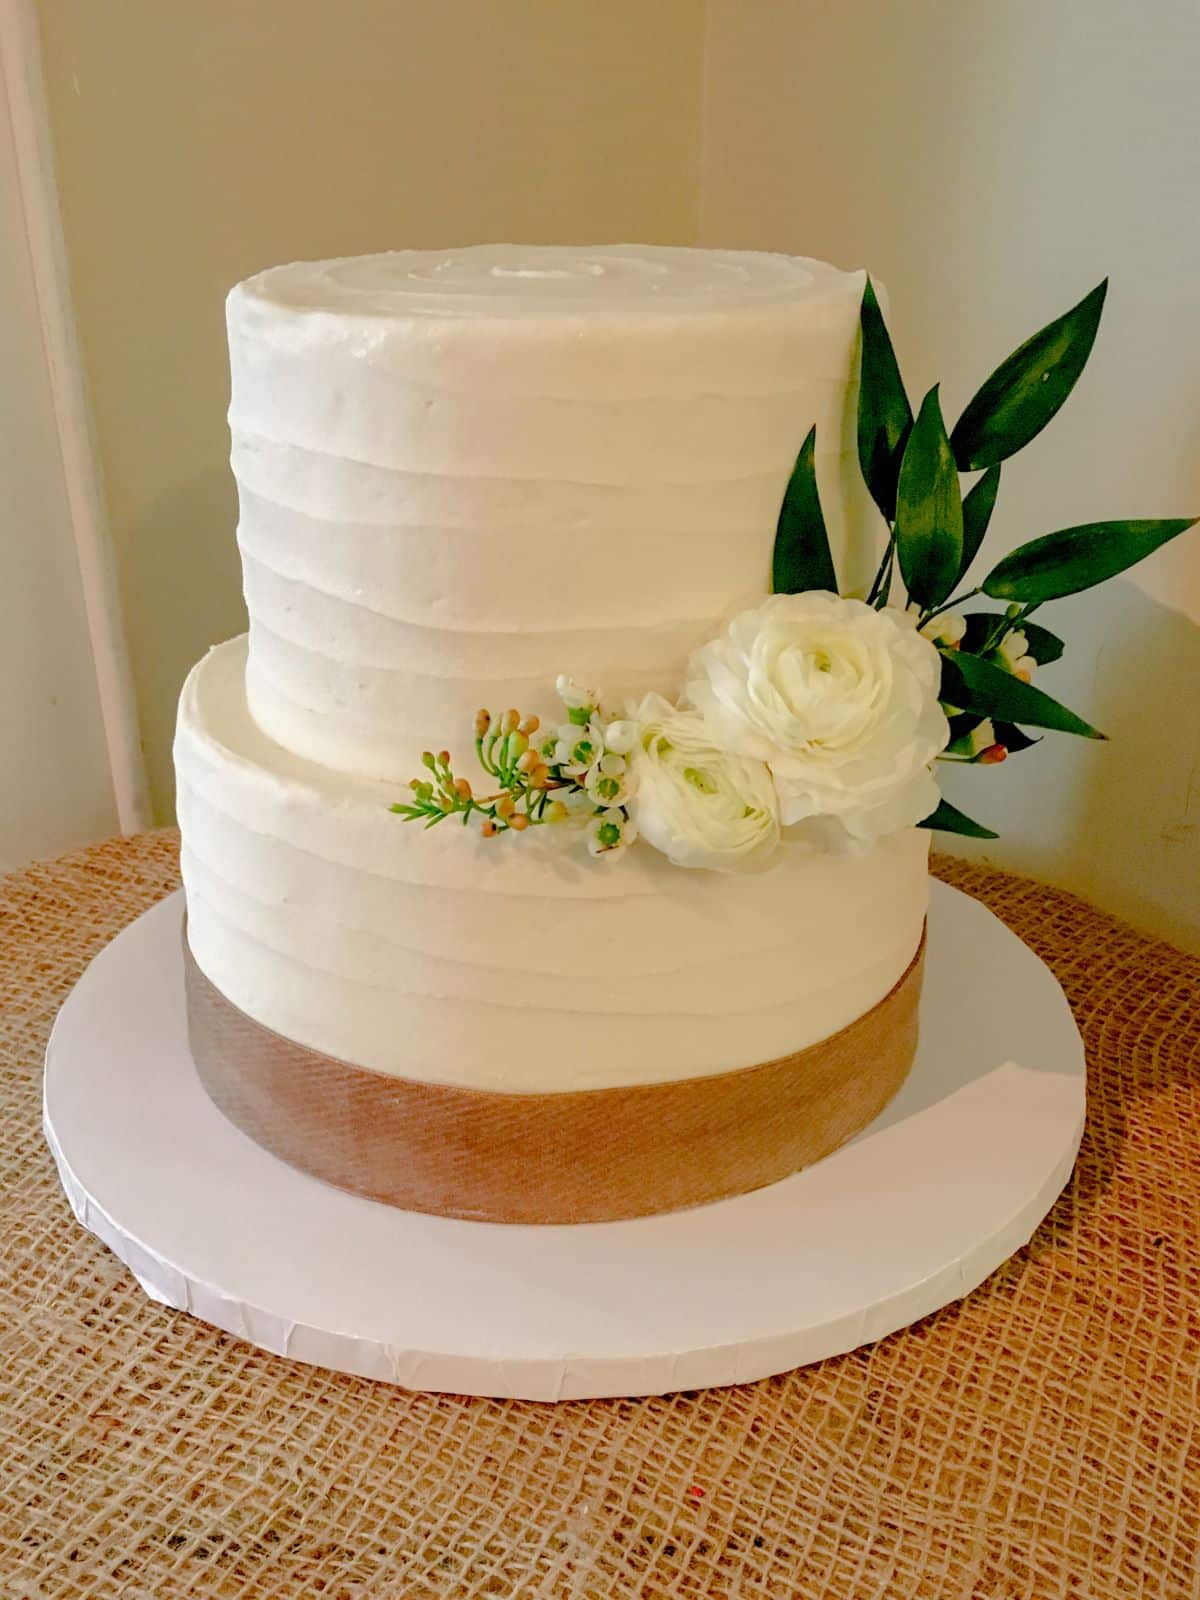 A simple minimalist wedding cake with fresh flowers.